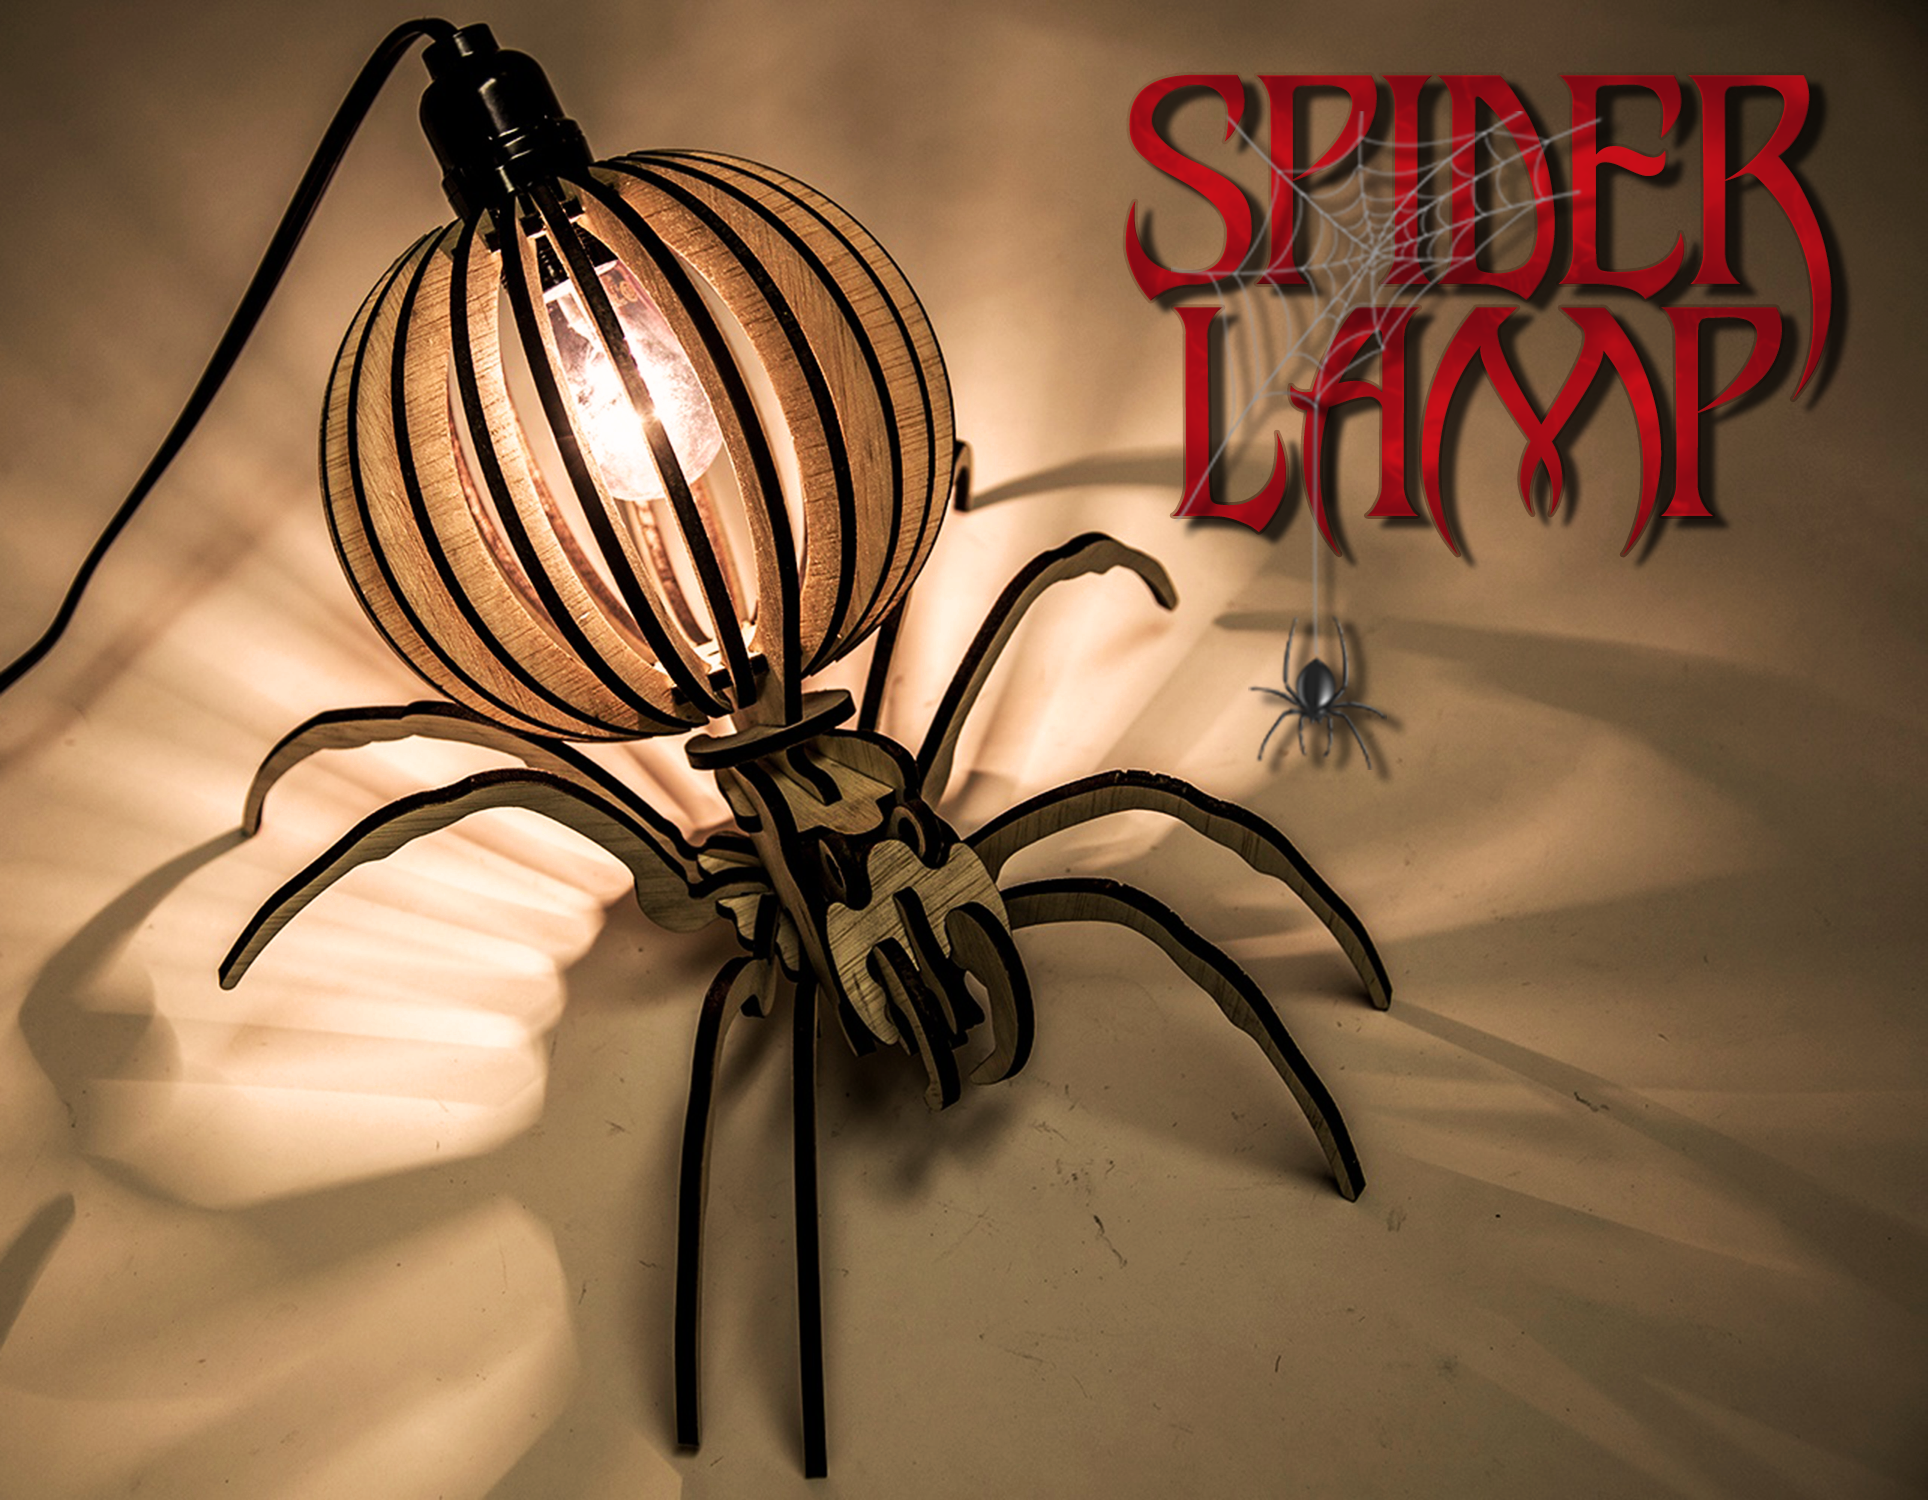 SOCIAL SPIDER LAMP